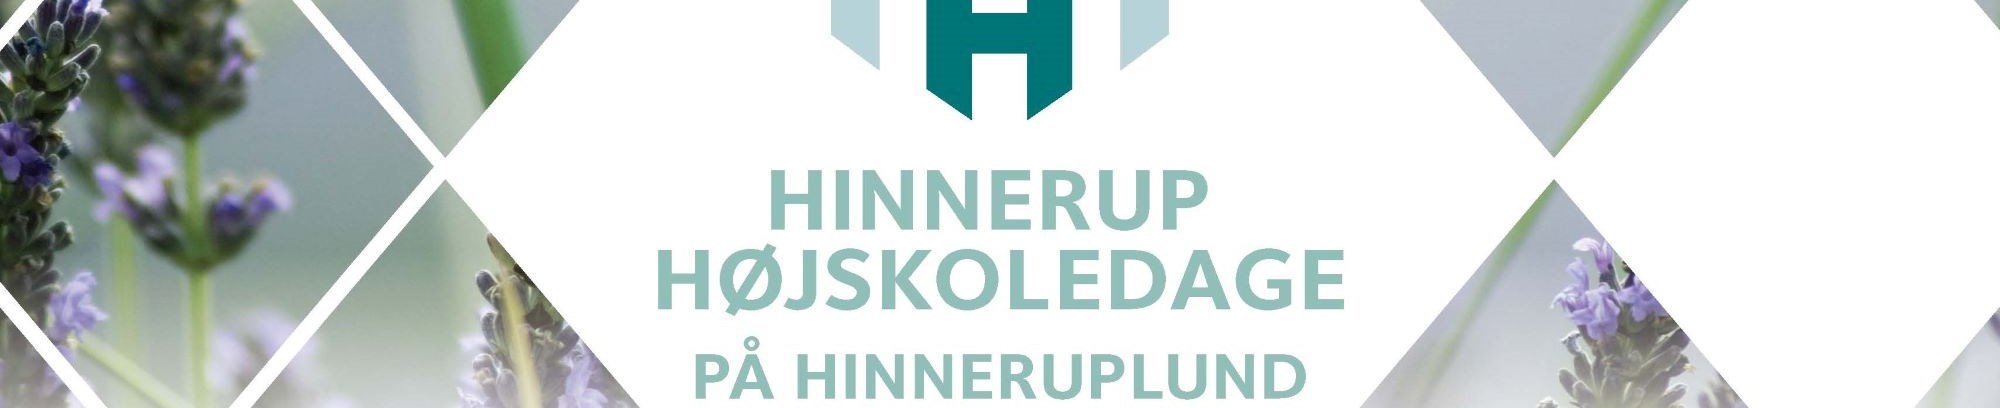 hinnerup højskoledage Hinneruplund Favrskov kommune og FOF